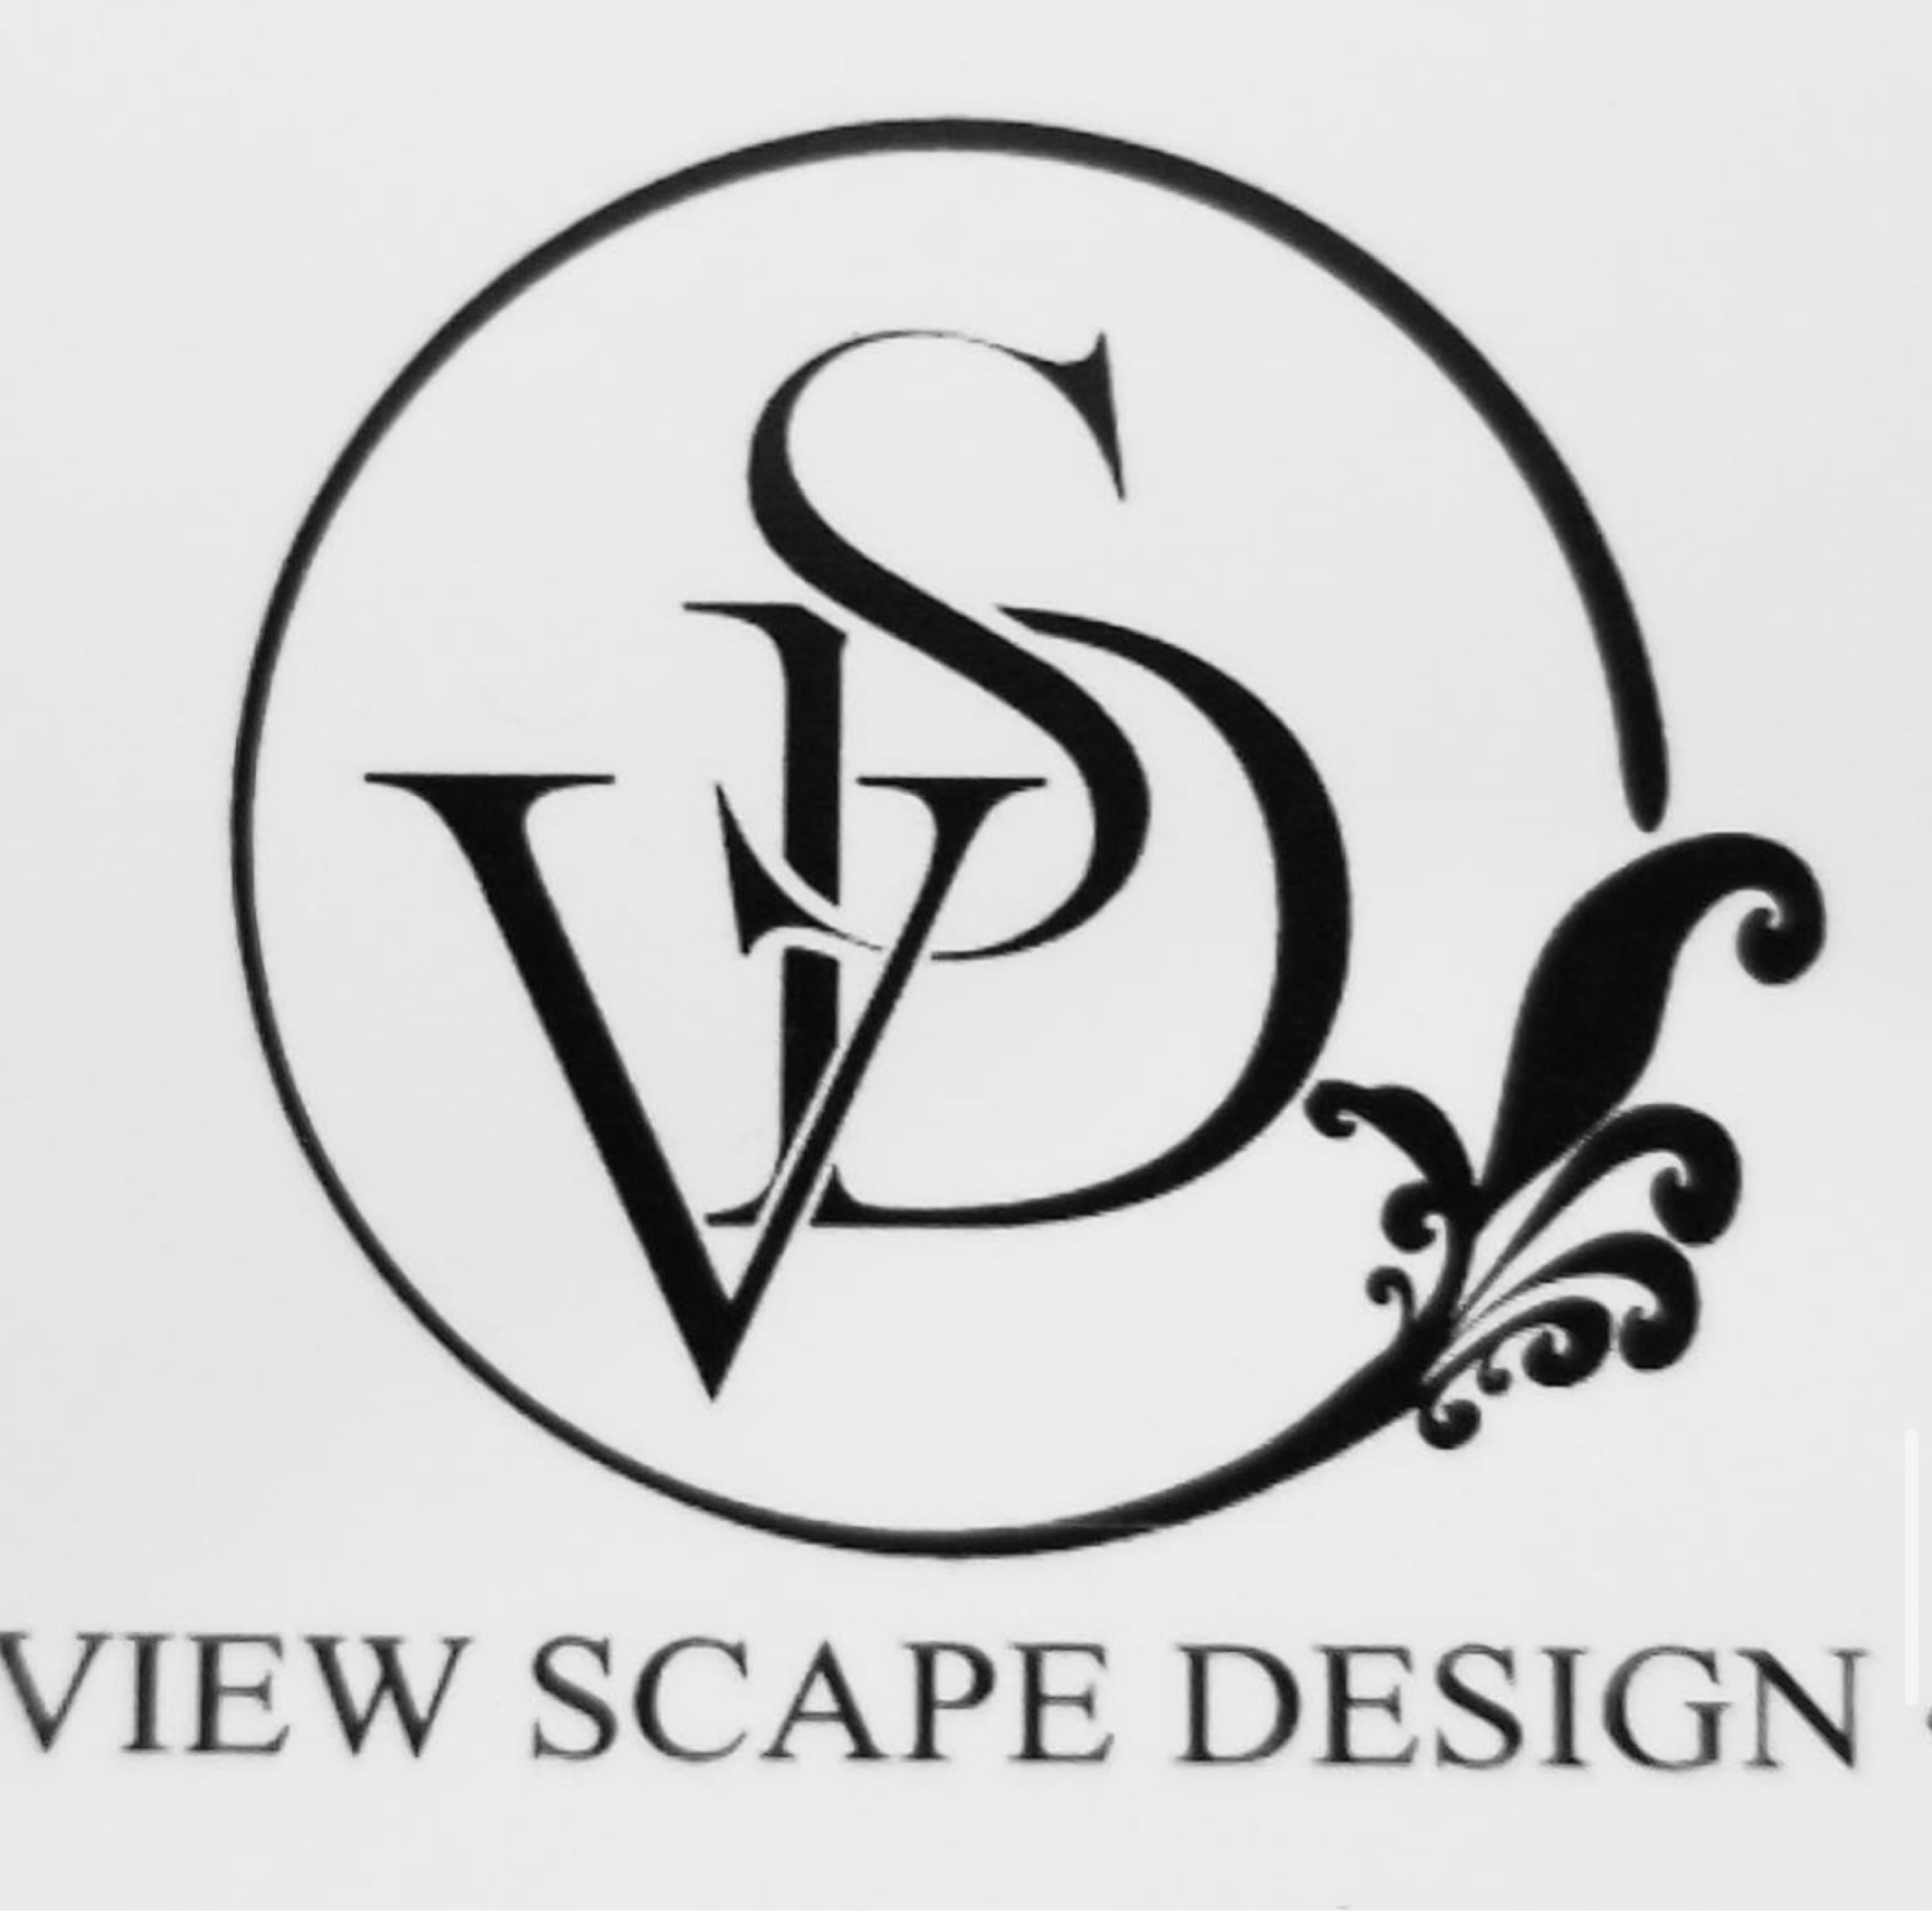 View Scape Design - Unlicensed Contractor Logo